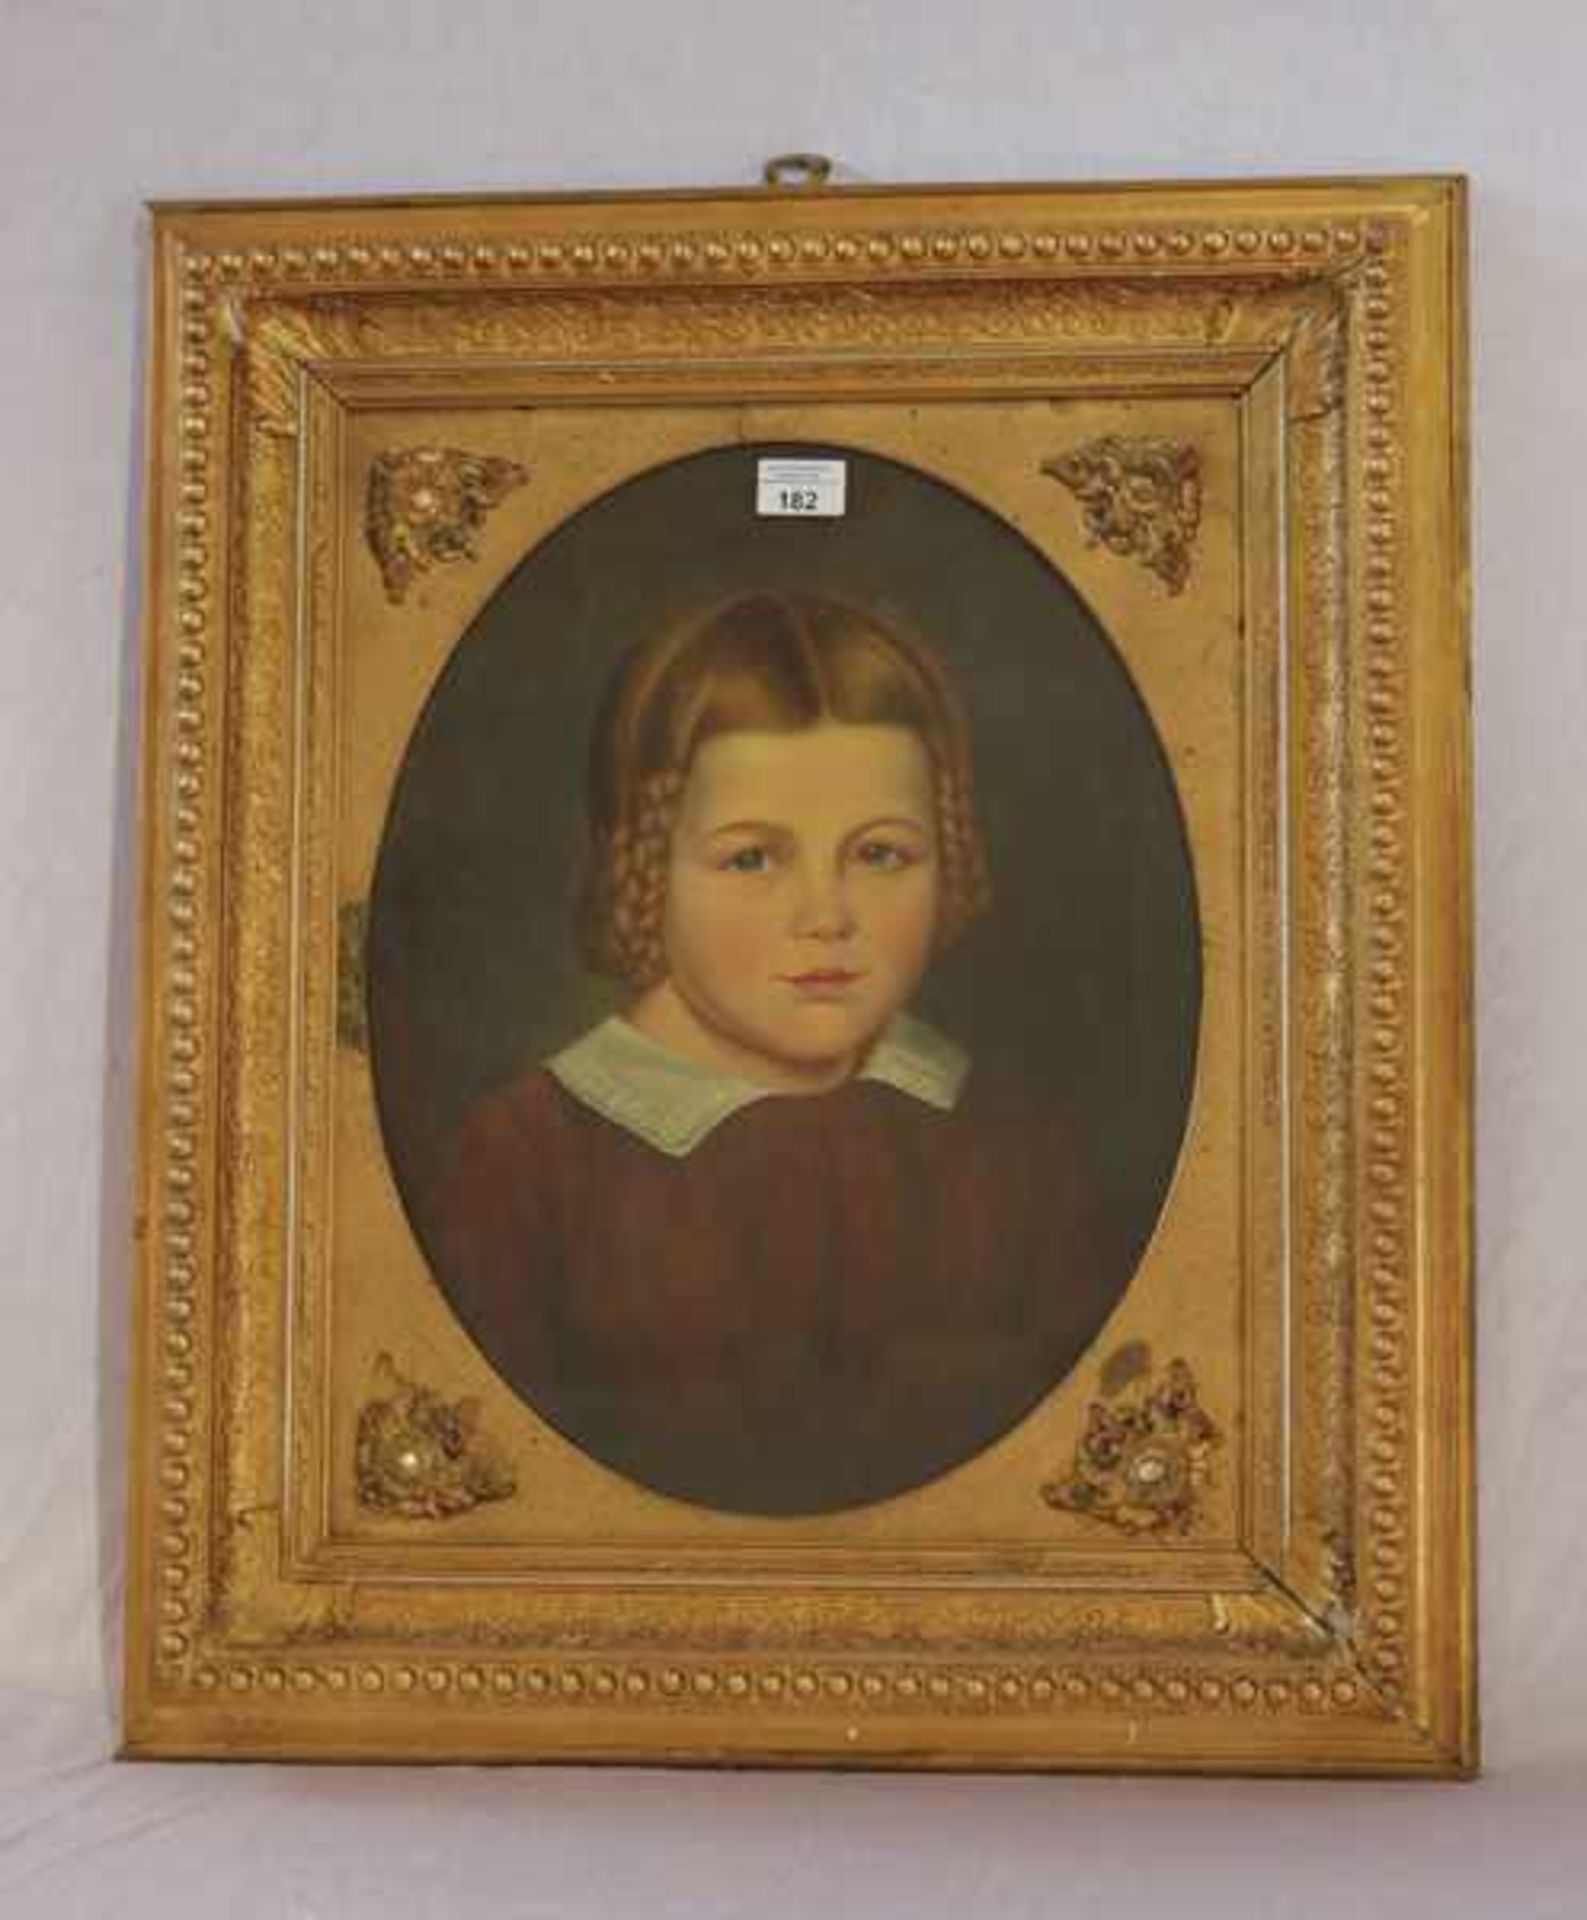 Gemälde ÖL/LW 'Mädchenbildnis', signiert O. (Oscar) Krötzsch, datiert 1890, unter Glas gerahmt,